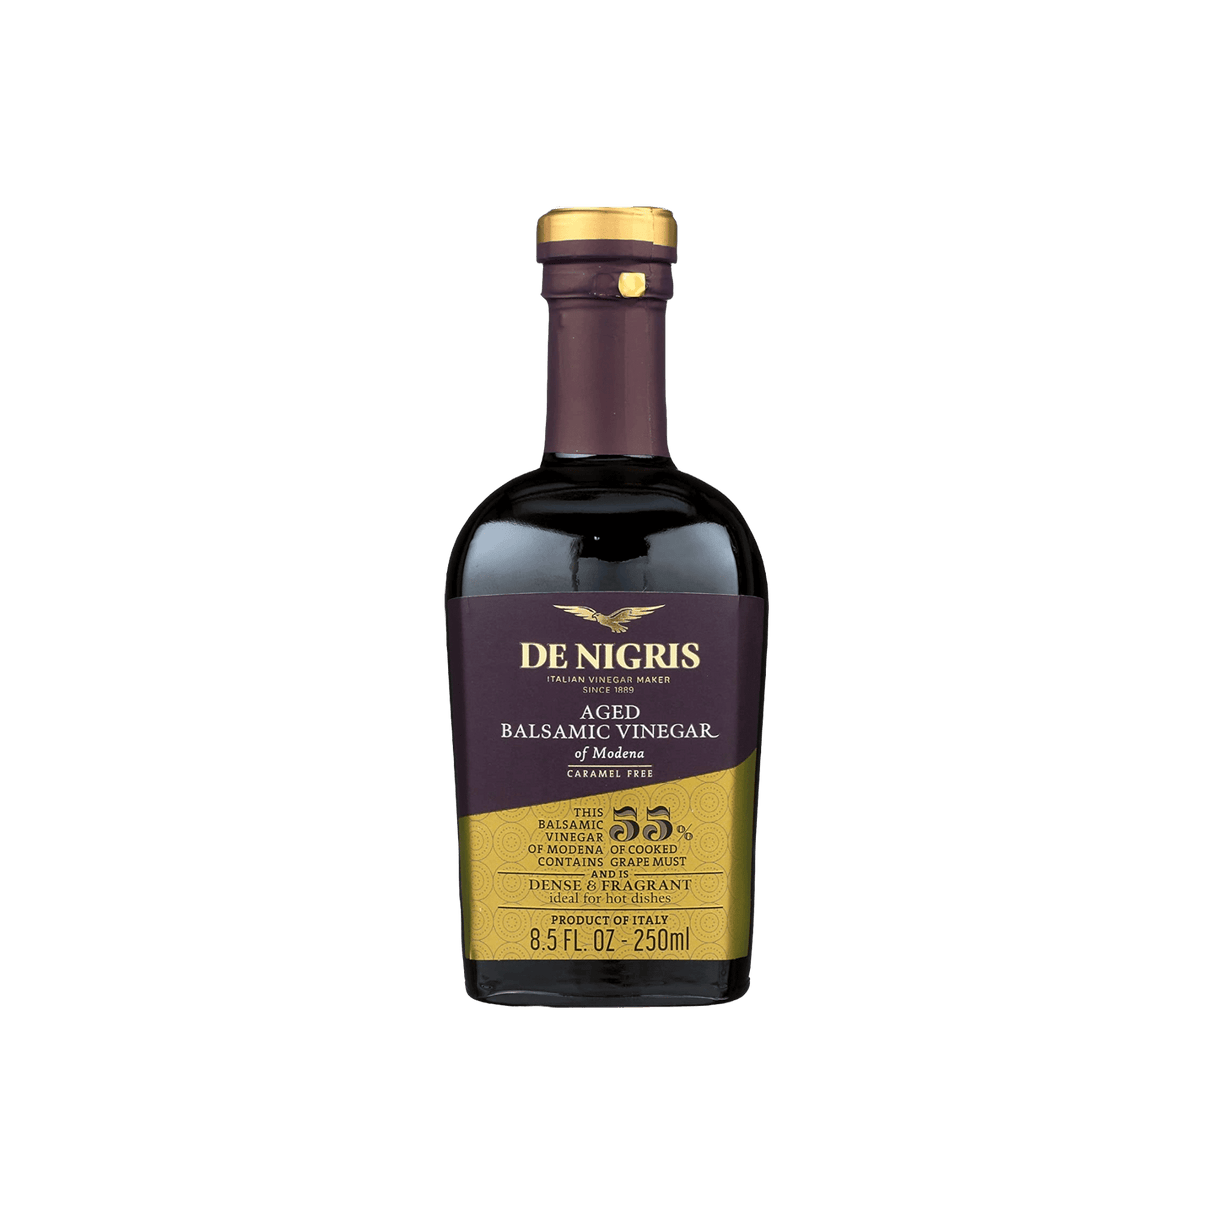 De Nigris Aged Balsamic Vinegar of Modena 55%